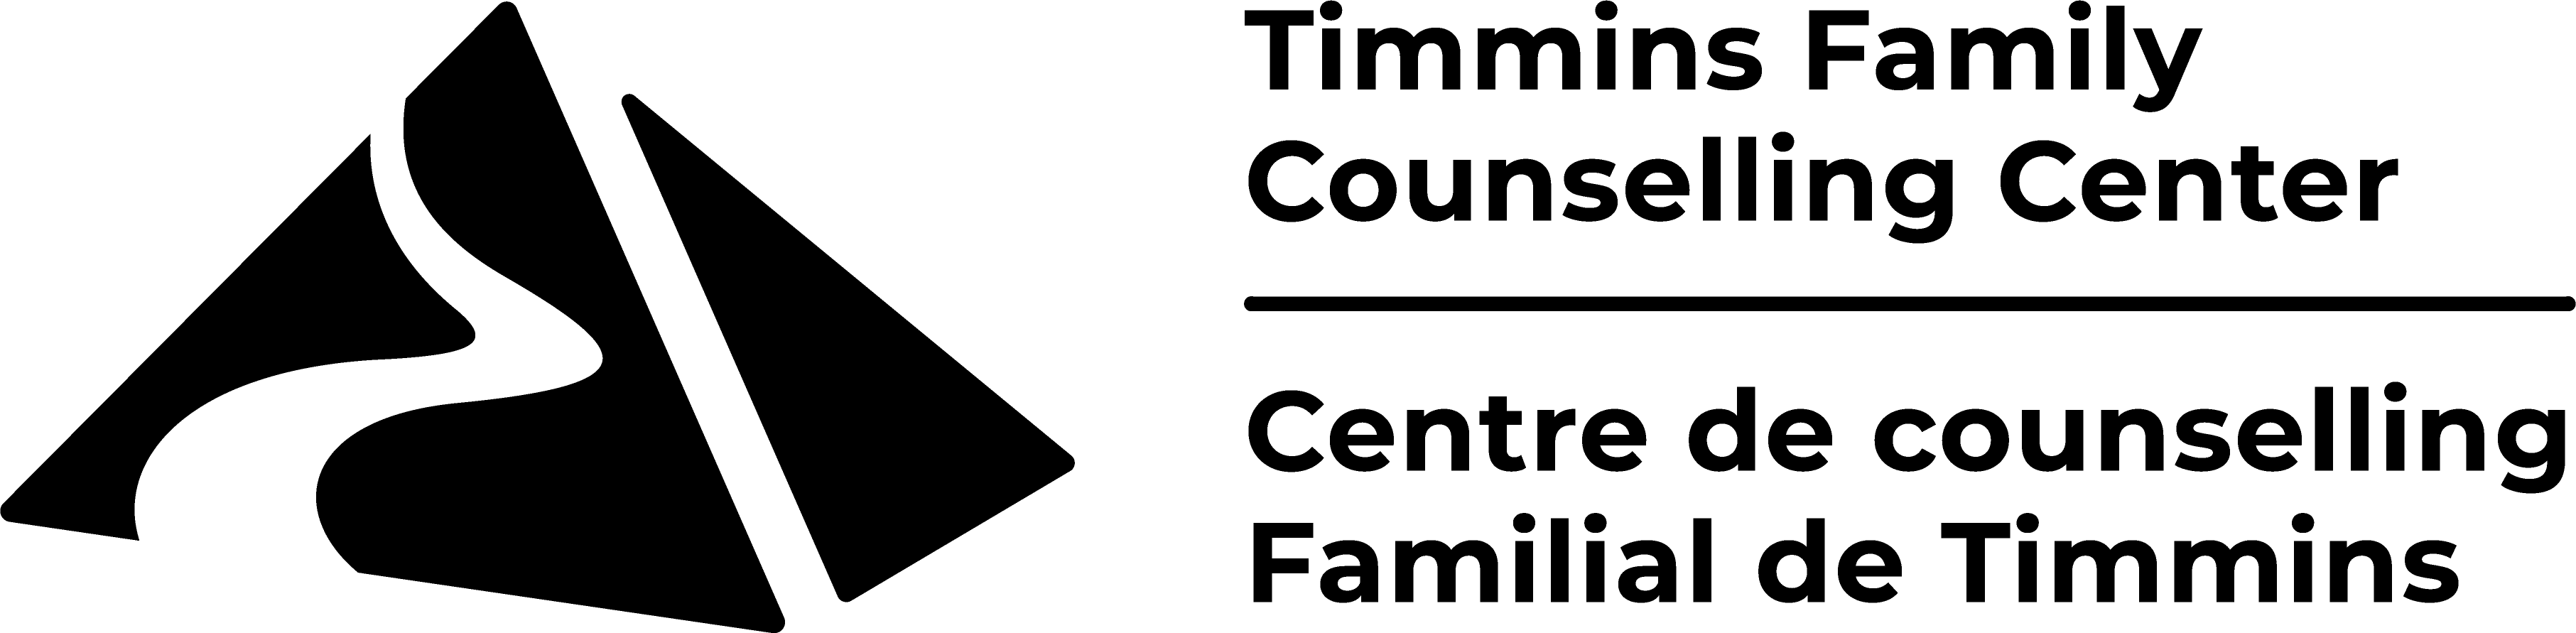 TFCC black logo